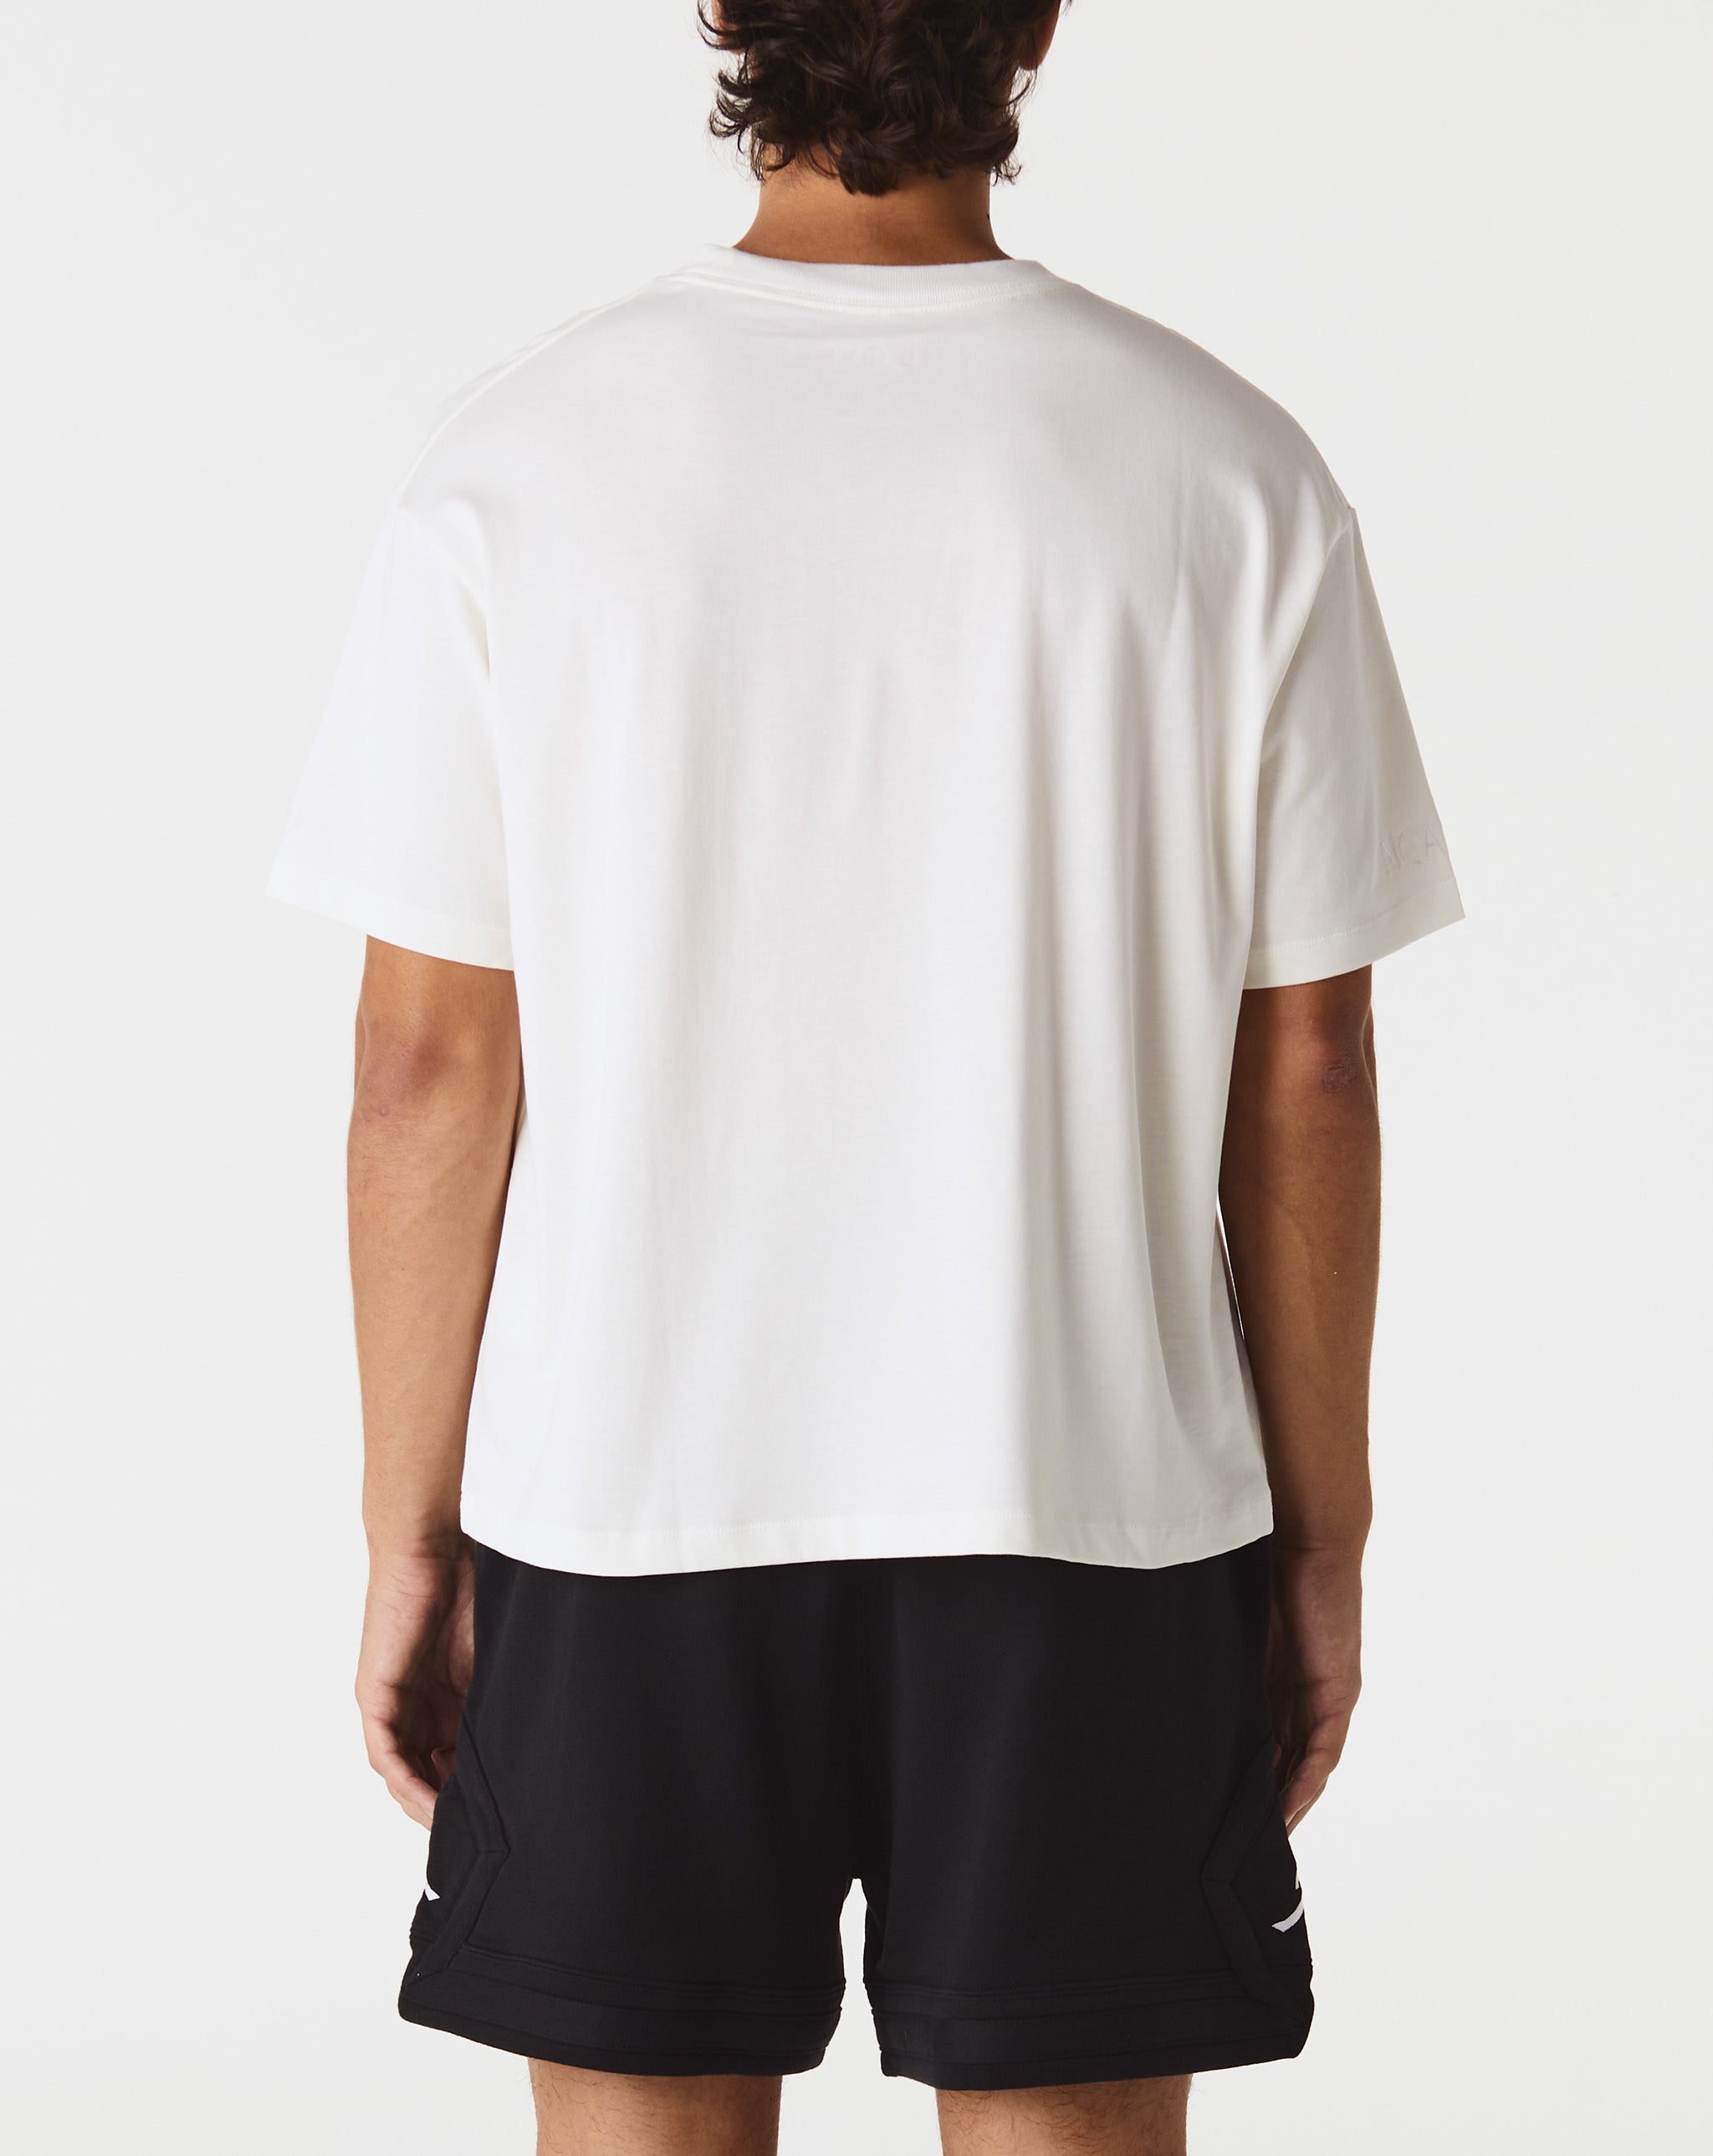 Air Jordan Nina Chanel Abney x T-Shirt  - Cheap Cerbe Jordan outlet